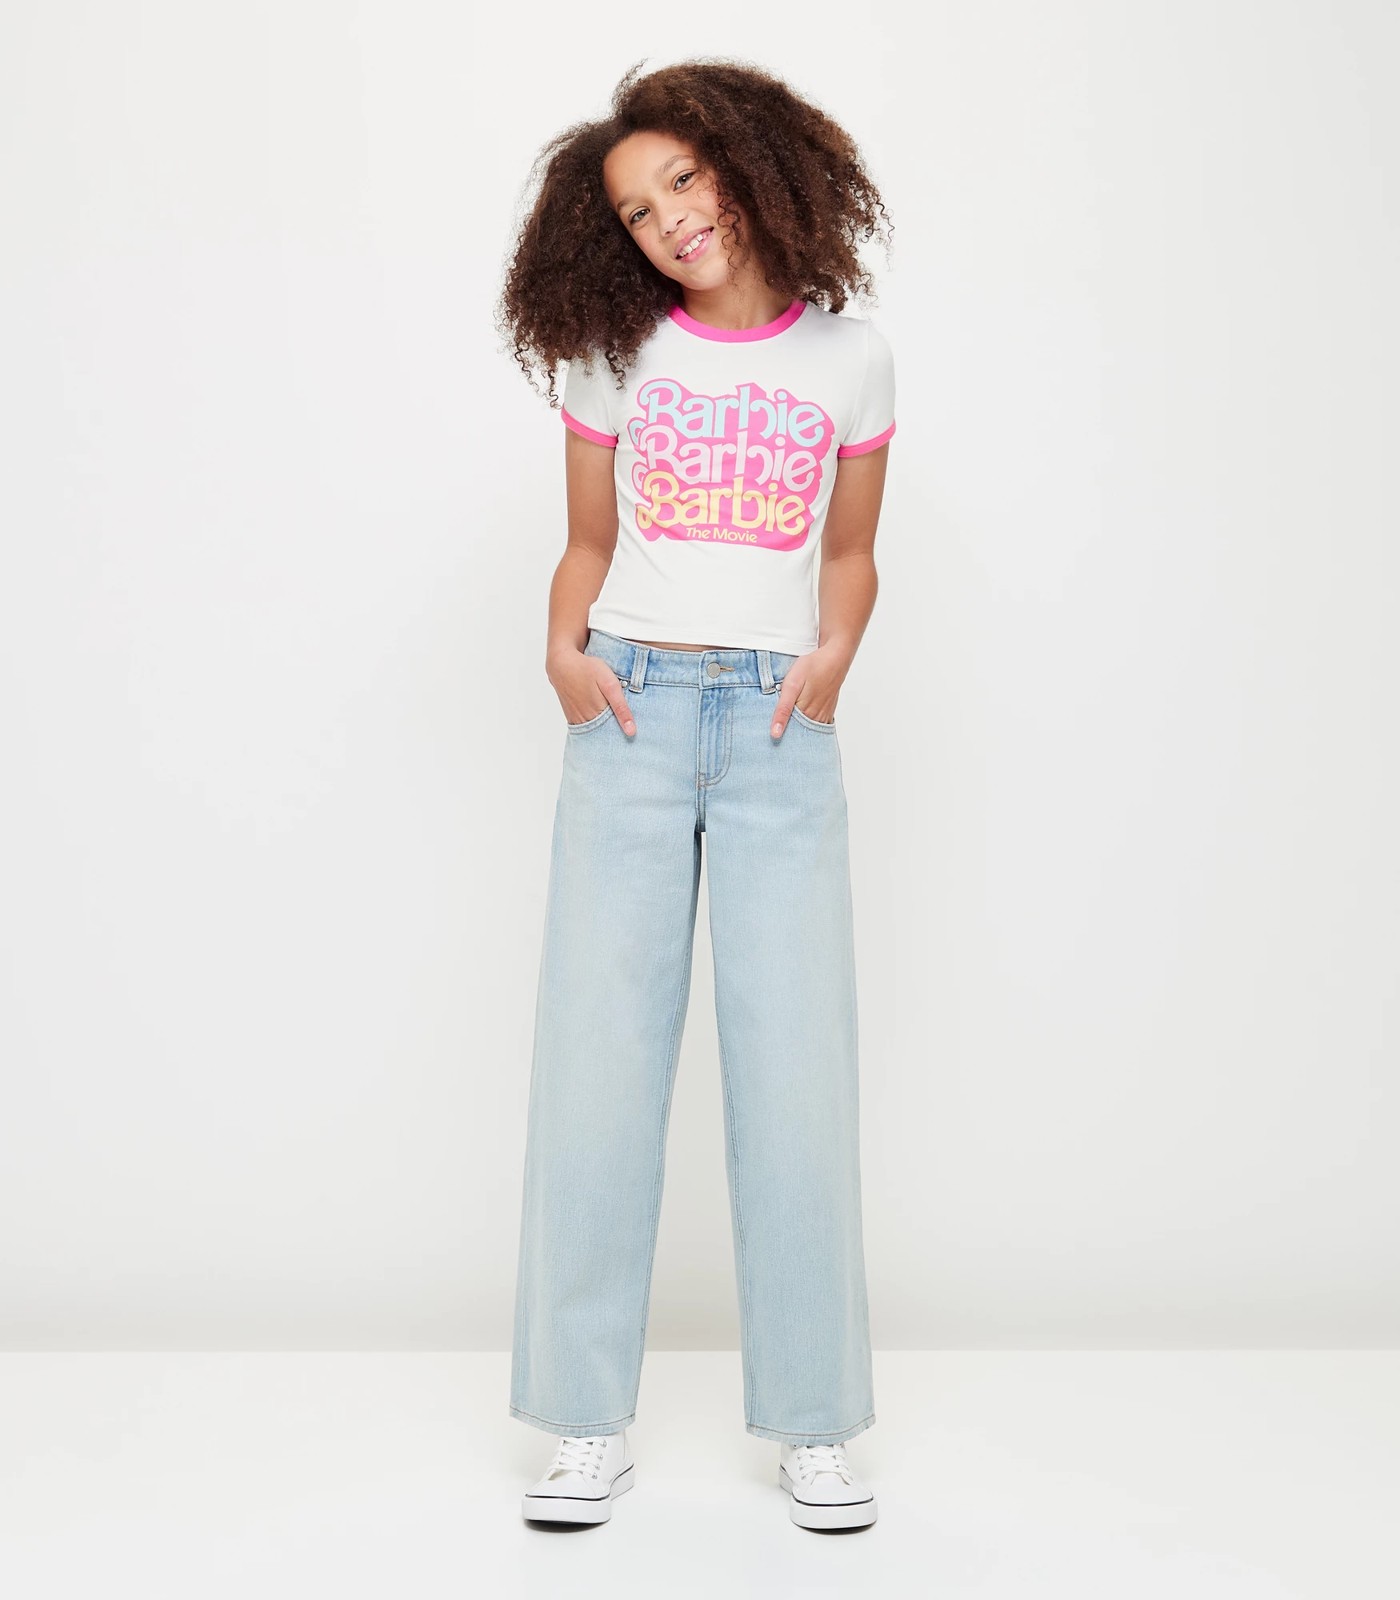 Barbie T-shirt | Target Australia